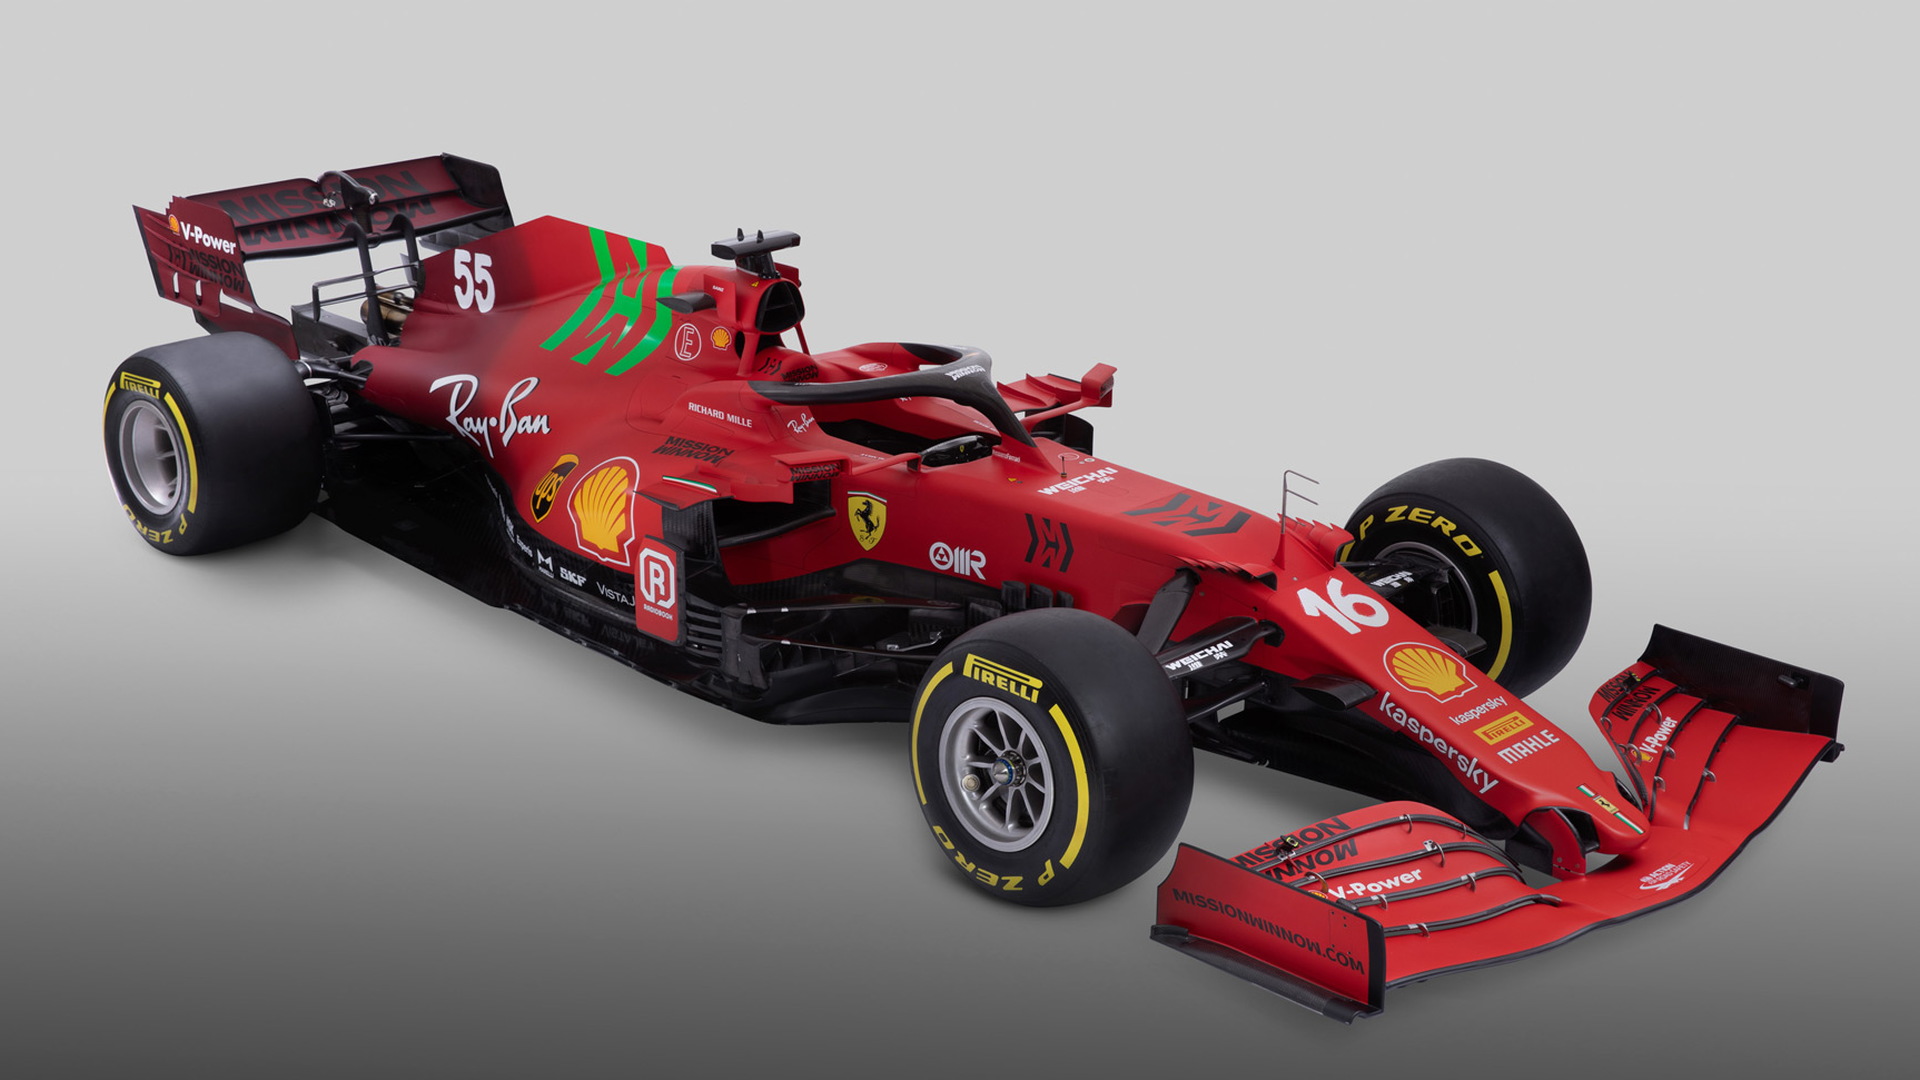 2021 Ferrari SF21 Formula One race car